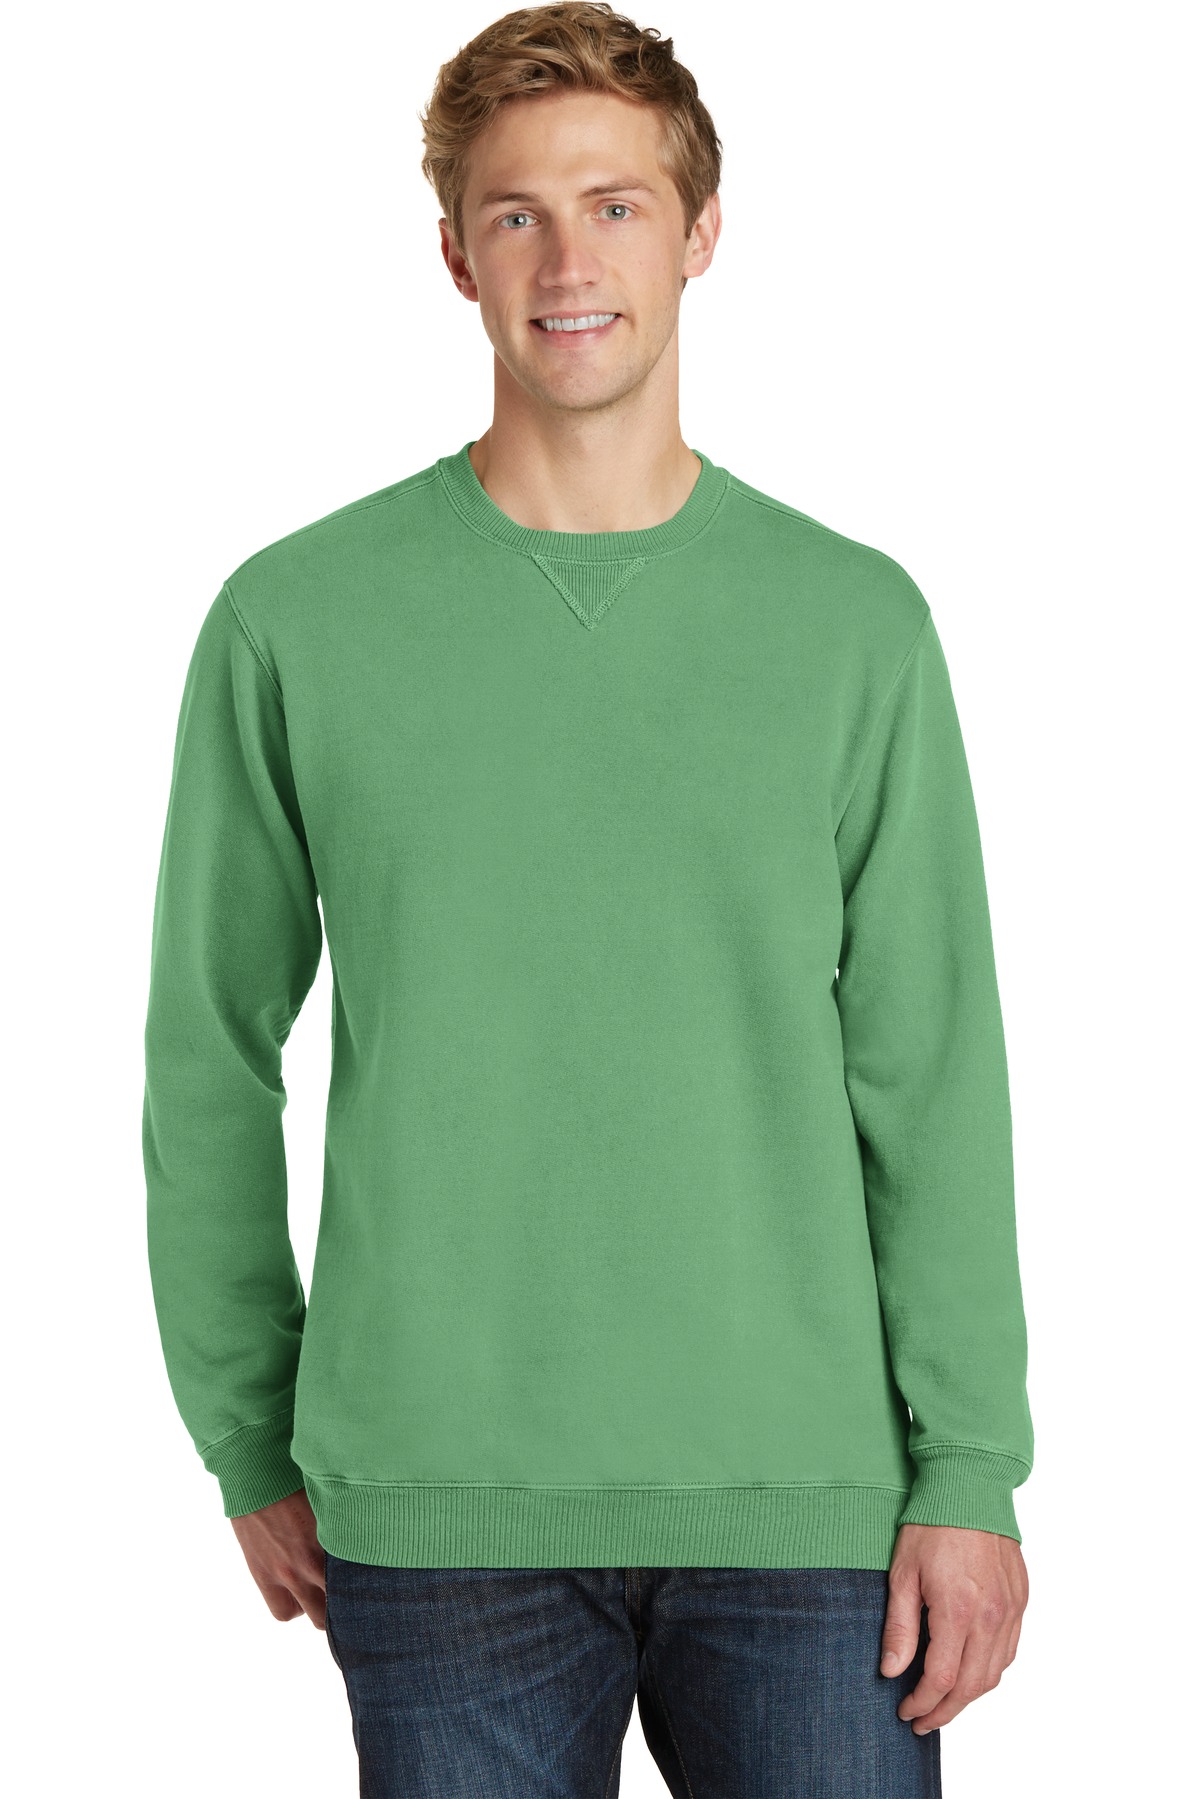 Port and Company Beach Wash Garment-Dye Sweatshirt PC098